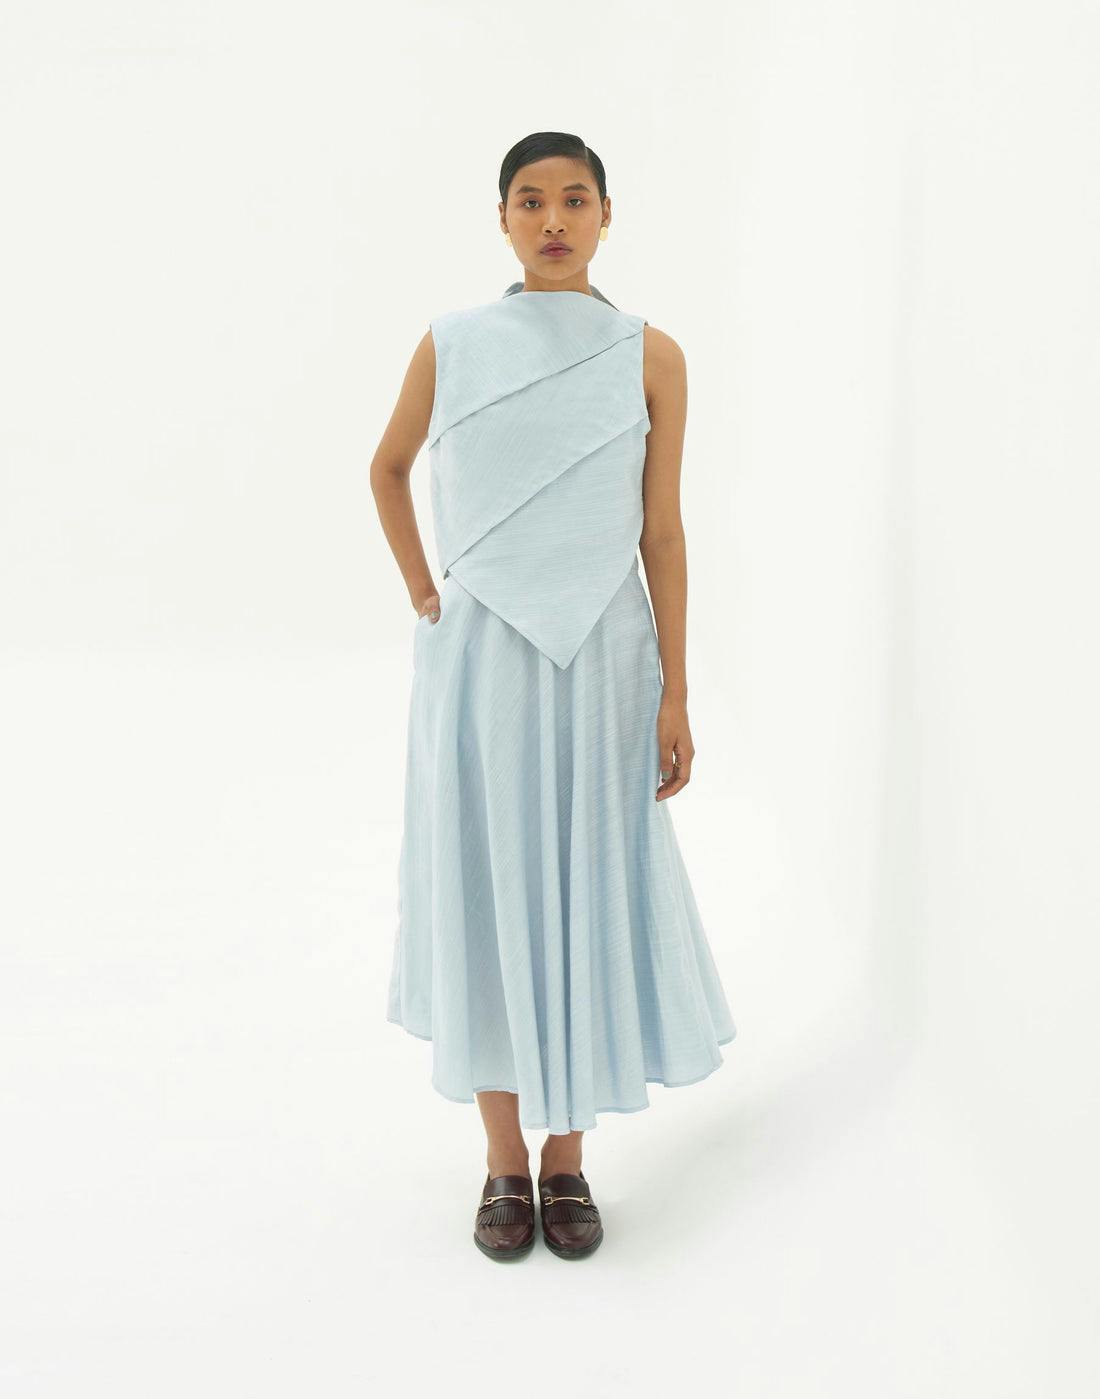 Powder blue dress, a product by Corpora Studio